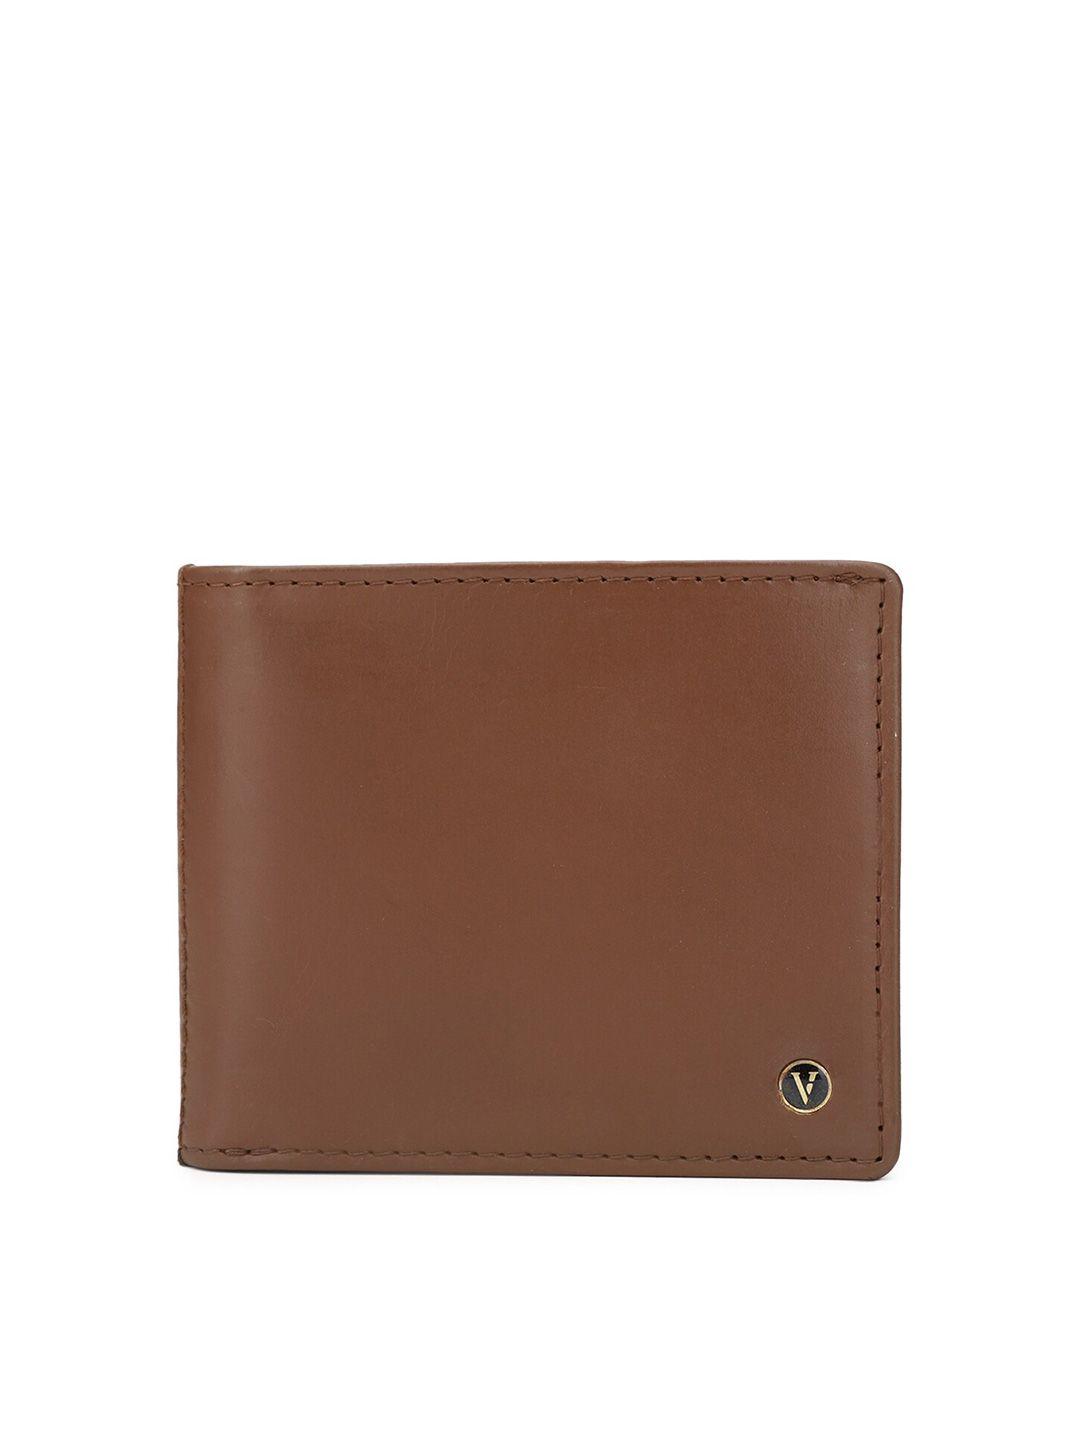 van heusen men brown leather two fold wallet